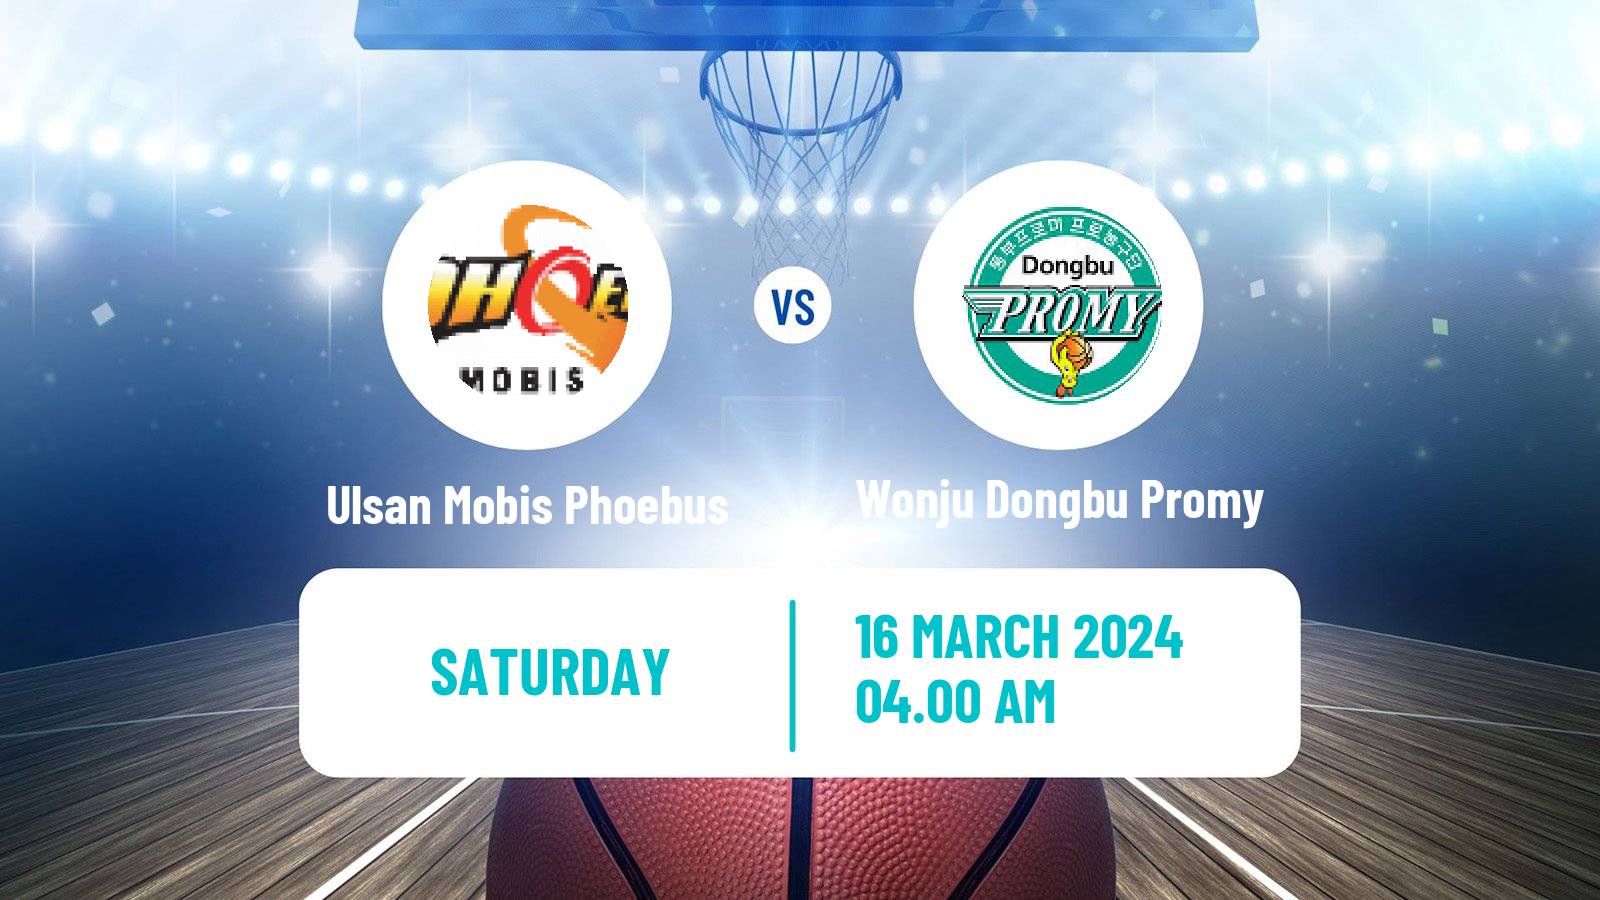 Basketball KBL Ulsan Mobis Phoebus - Wonju Dongbu Promy